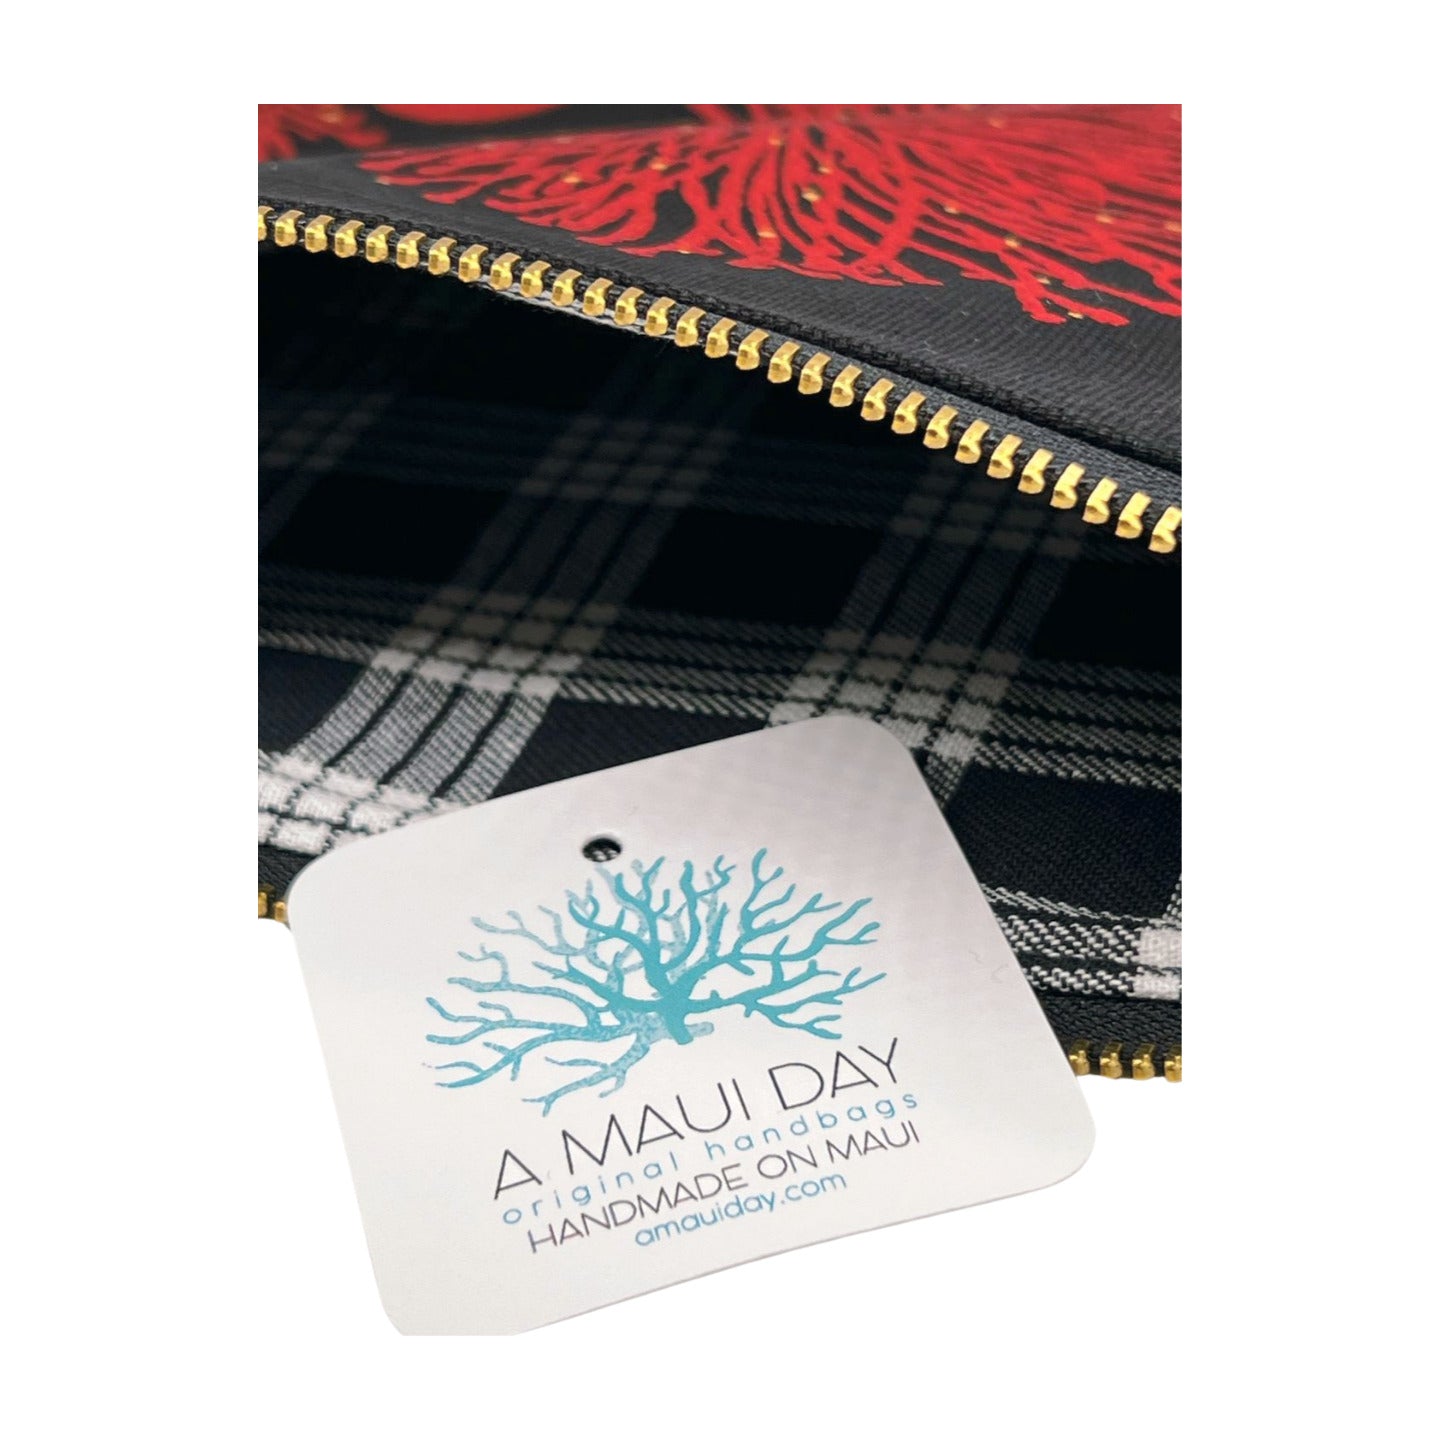 Pop-Up Mākeke - A Maui Day Original Handbags - Handprinted Small Handbag - Red 'Ohi'a on Black Canvas - Inside